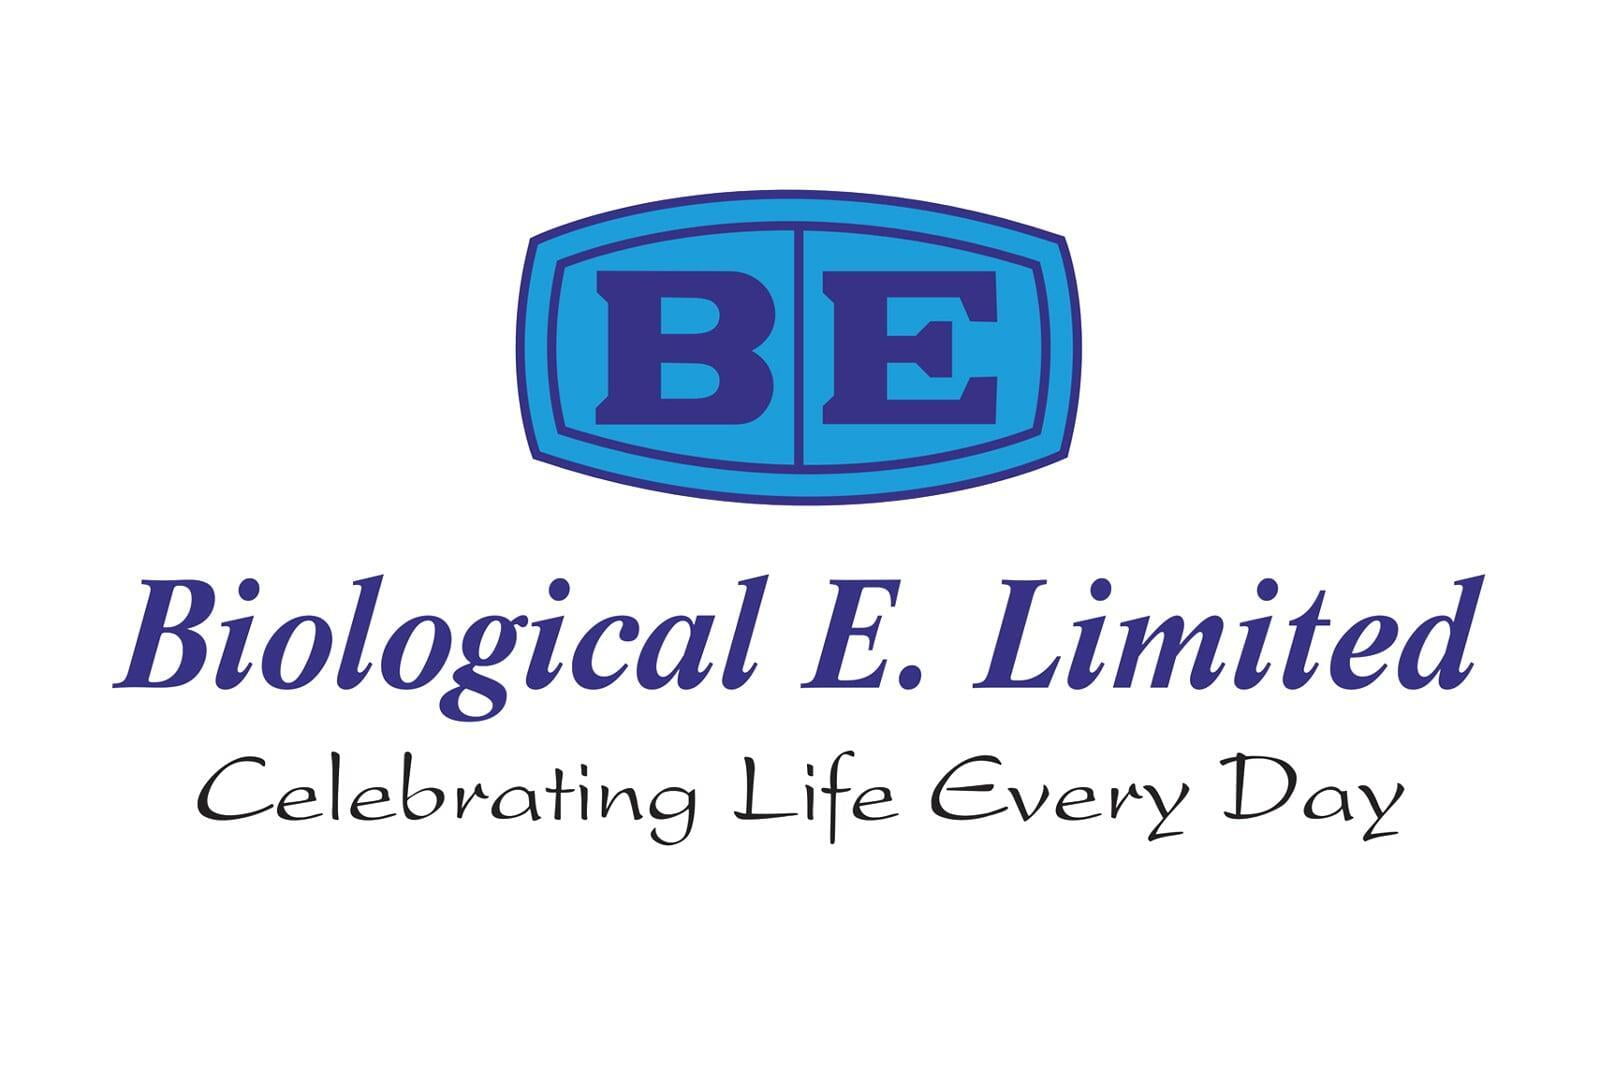 Biological E